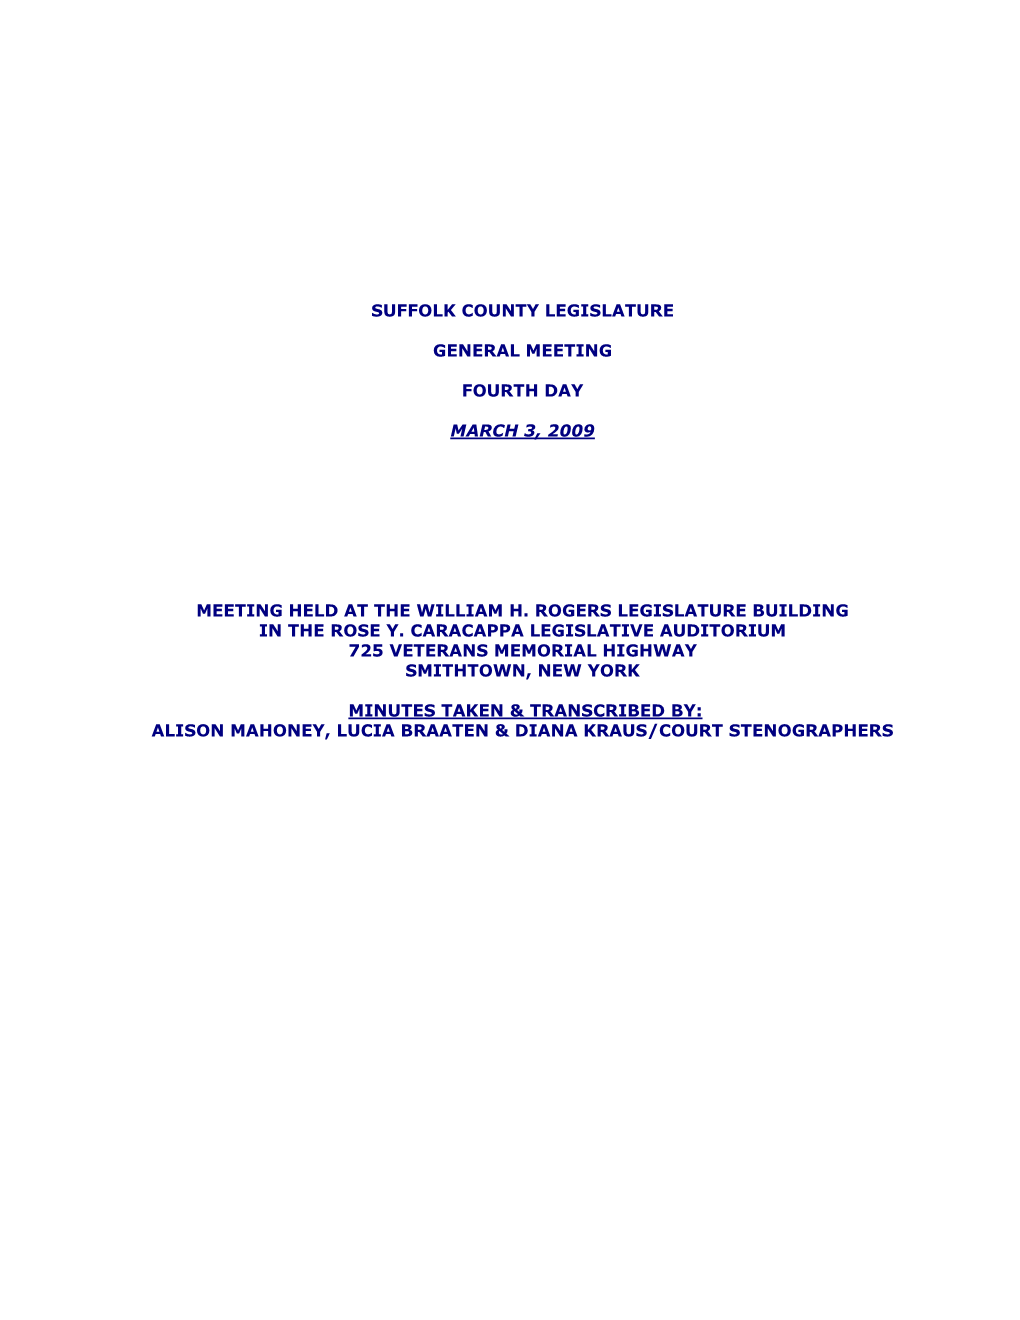 03/03/2009 General Meeting Minutes (PDF)